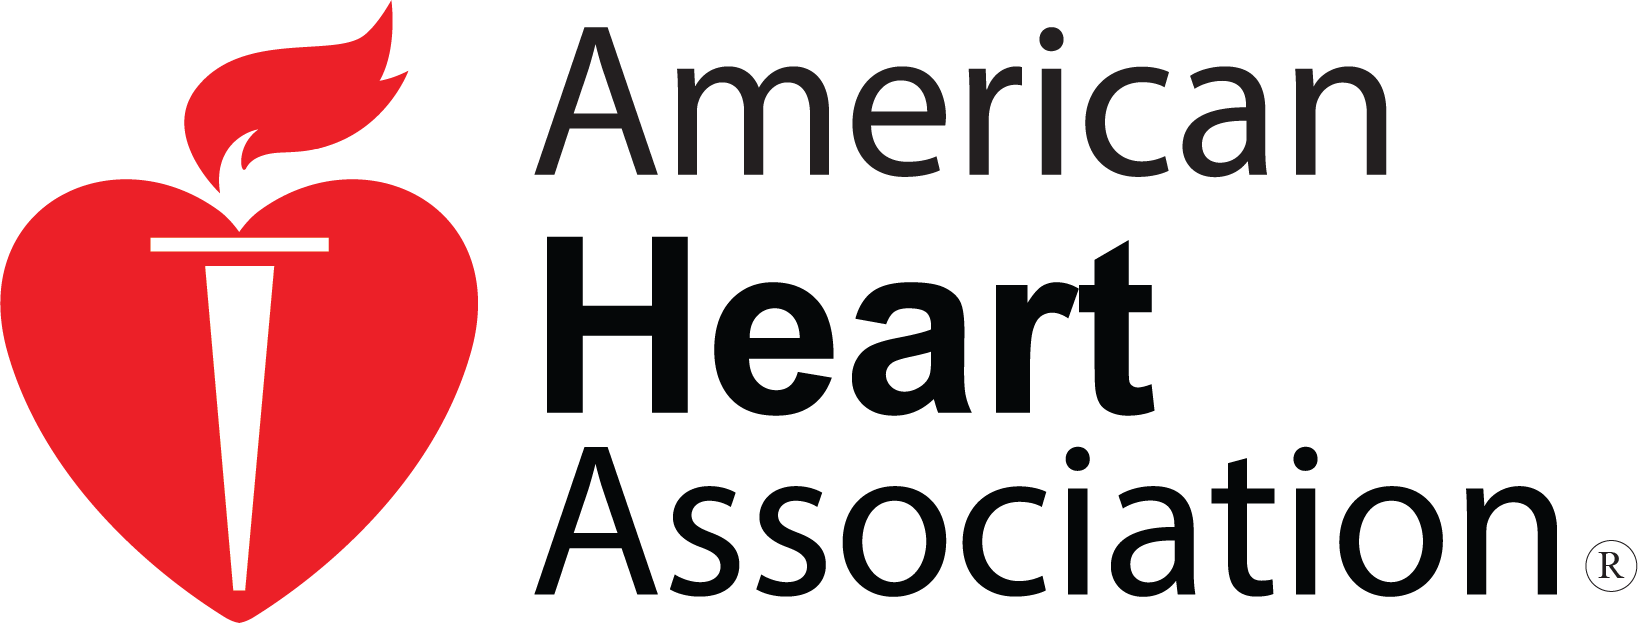 9/9/2017 Aha - American Heart Association Logo Png (1638x623)